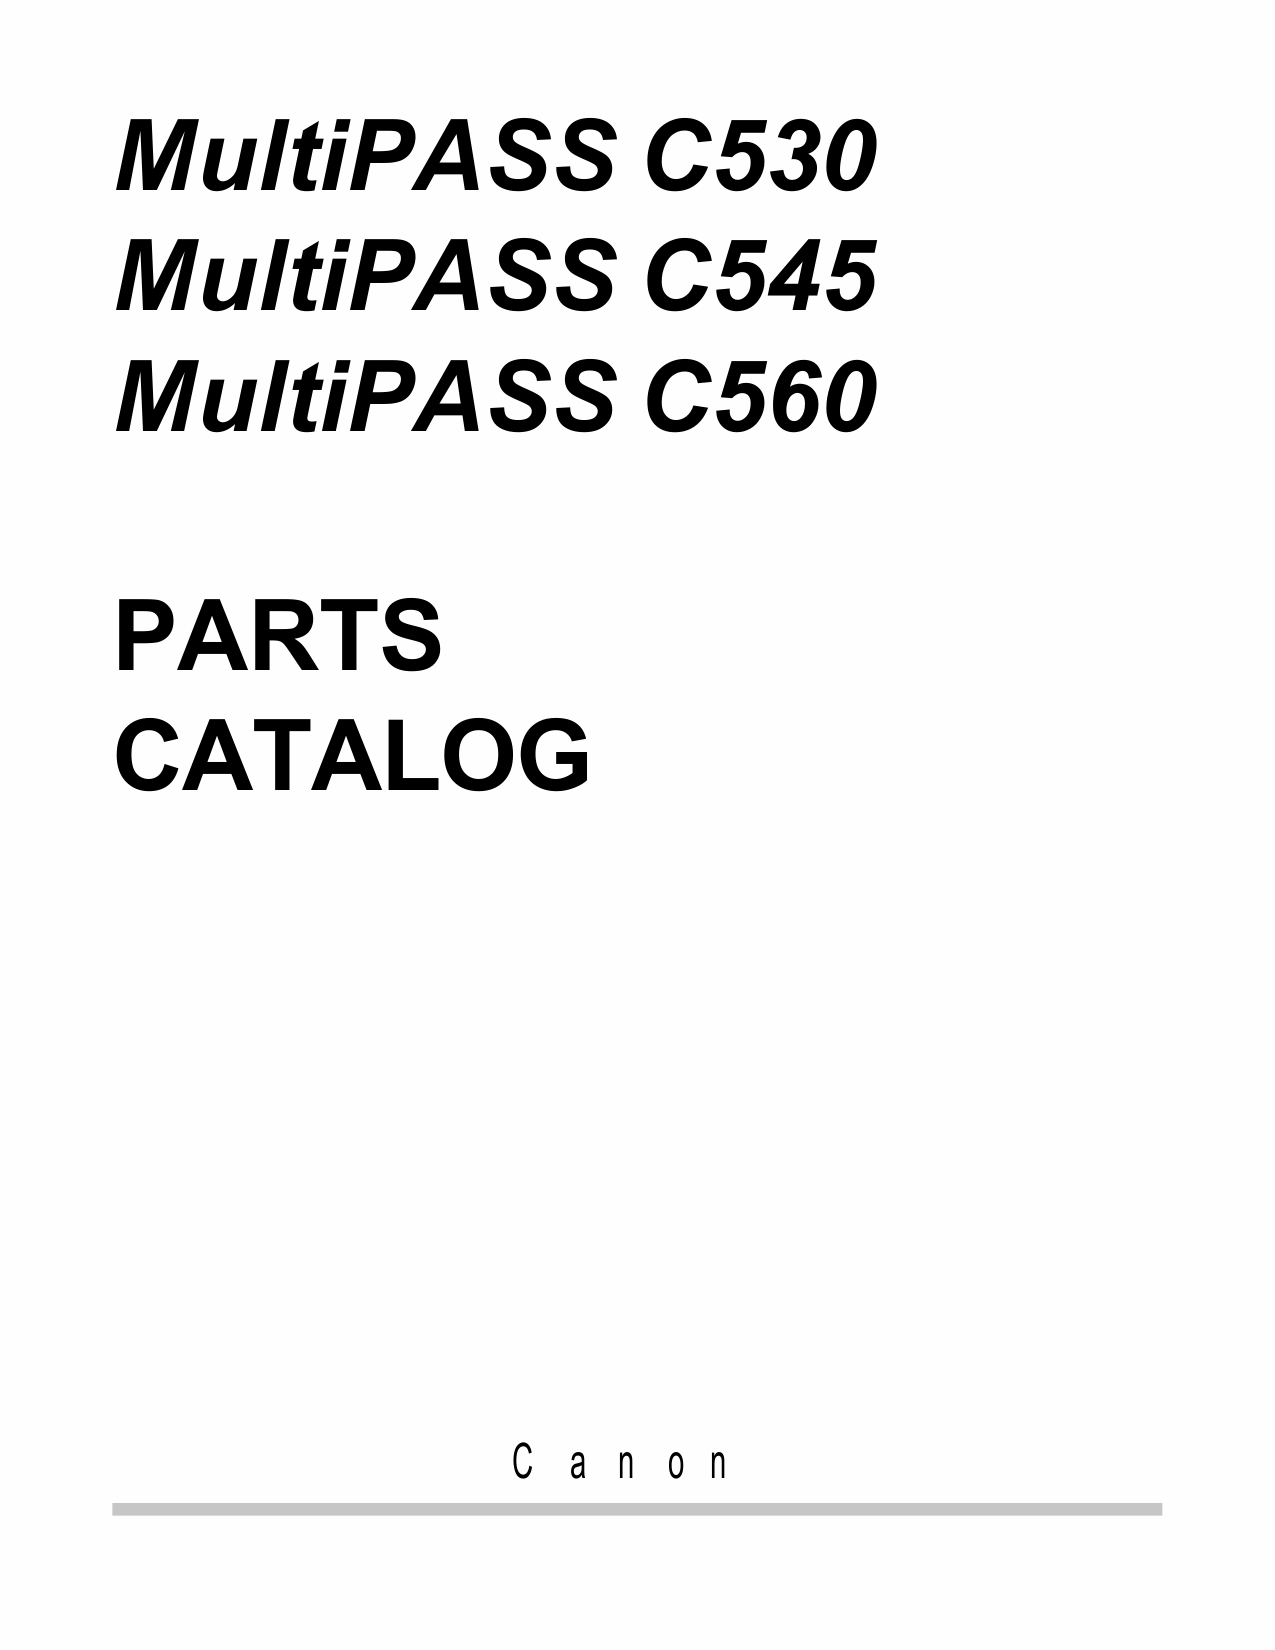 Canon MultiPASS MP-C530 C545 C560 Parts Catalog Manual-1